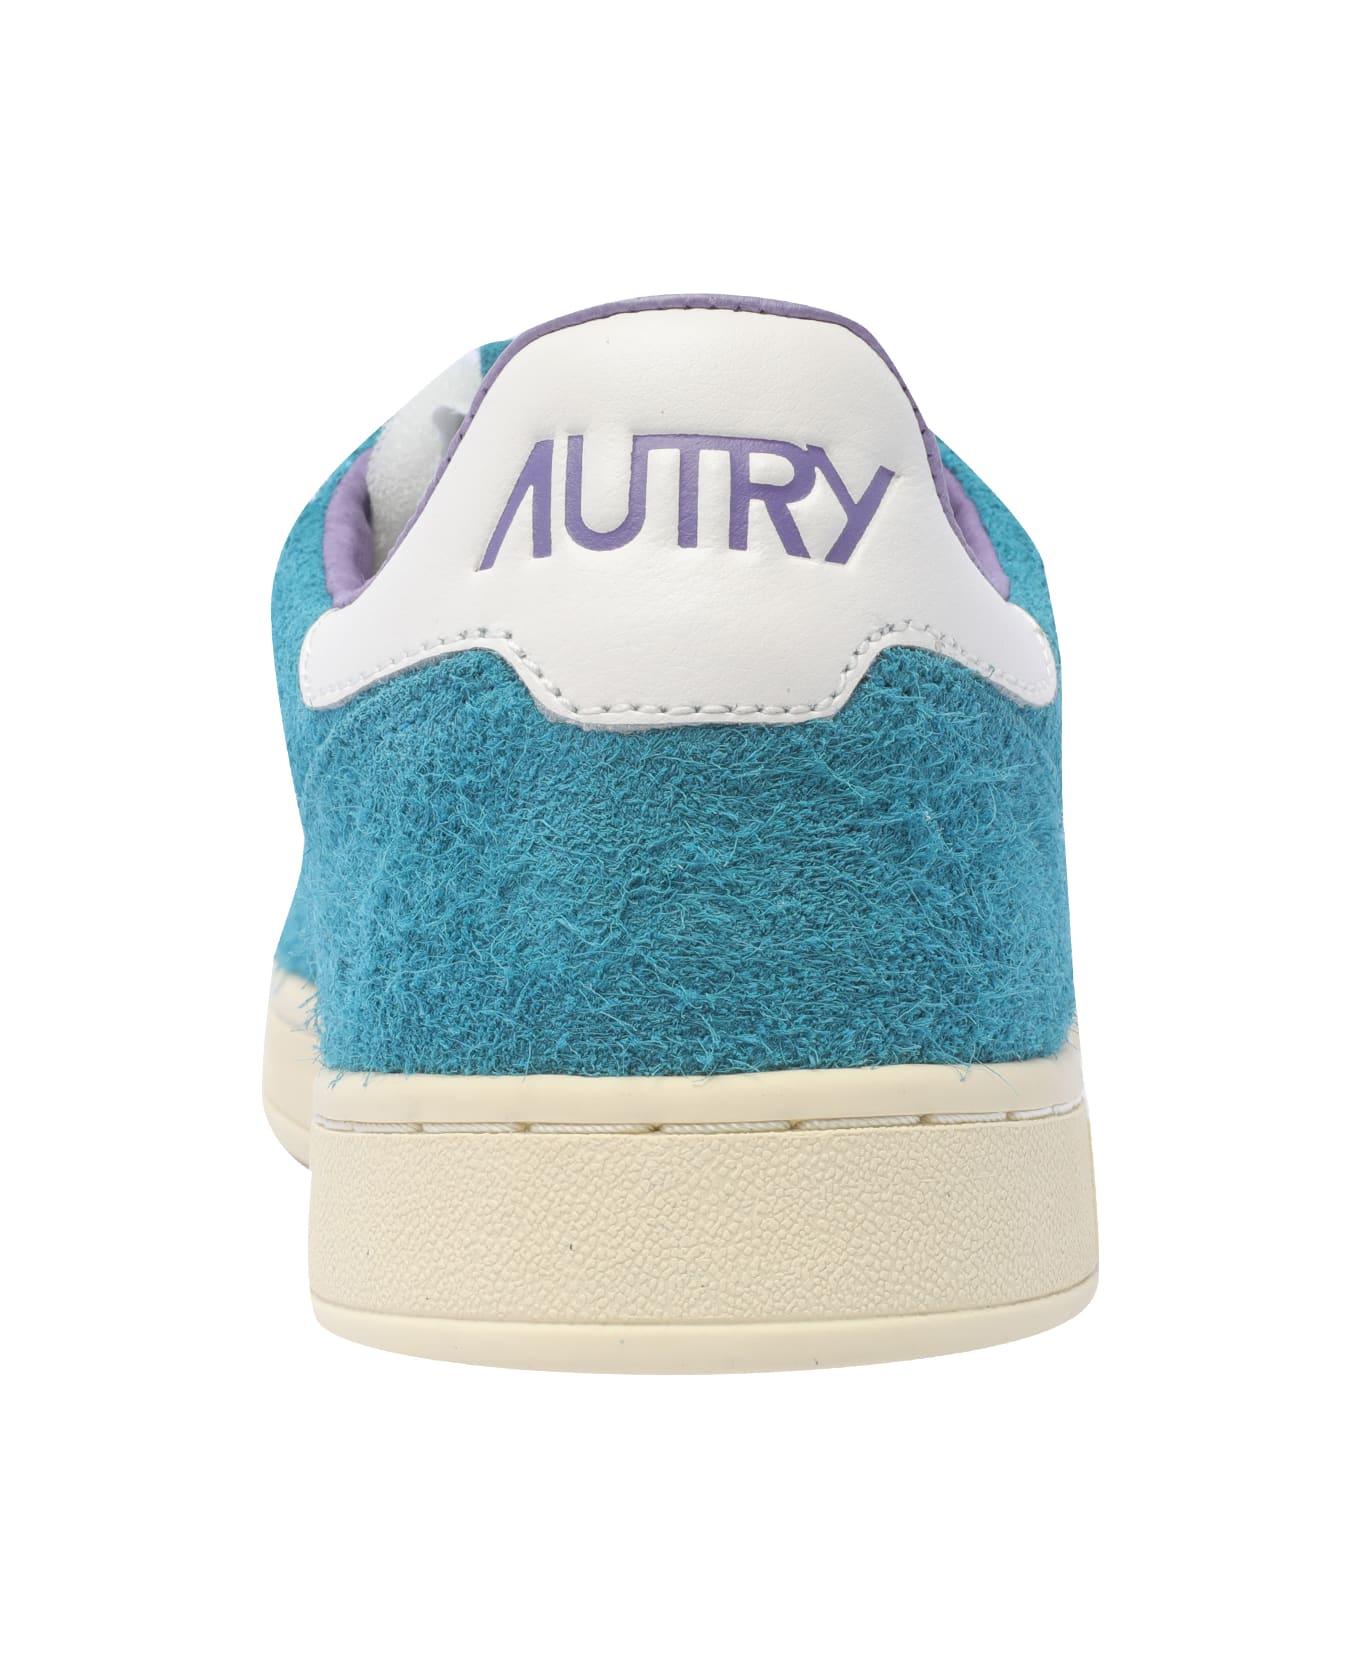 Autry Medalist Flat Low Sneakers - Blue